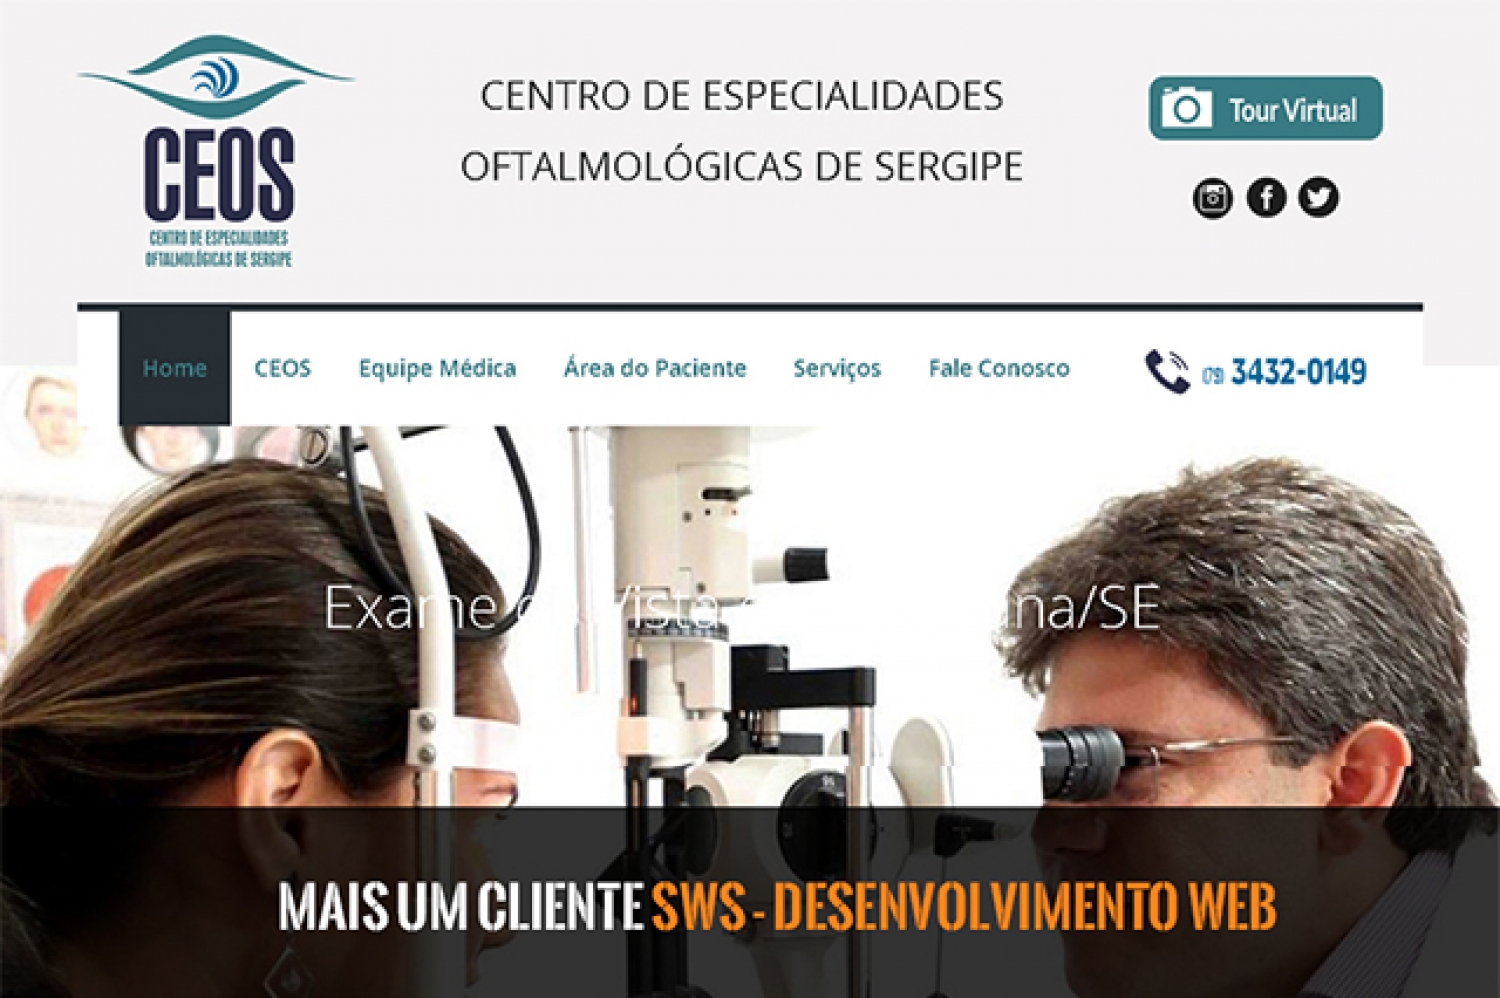 CEOS OLHOS - Centro de Especialidades Oftalmológicas de Sergipe